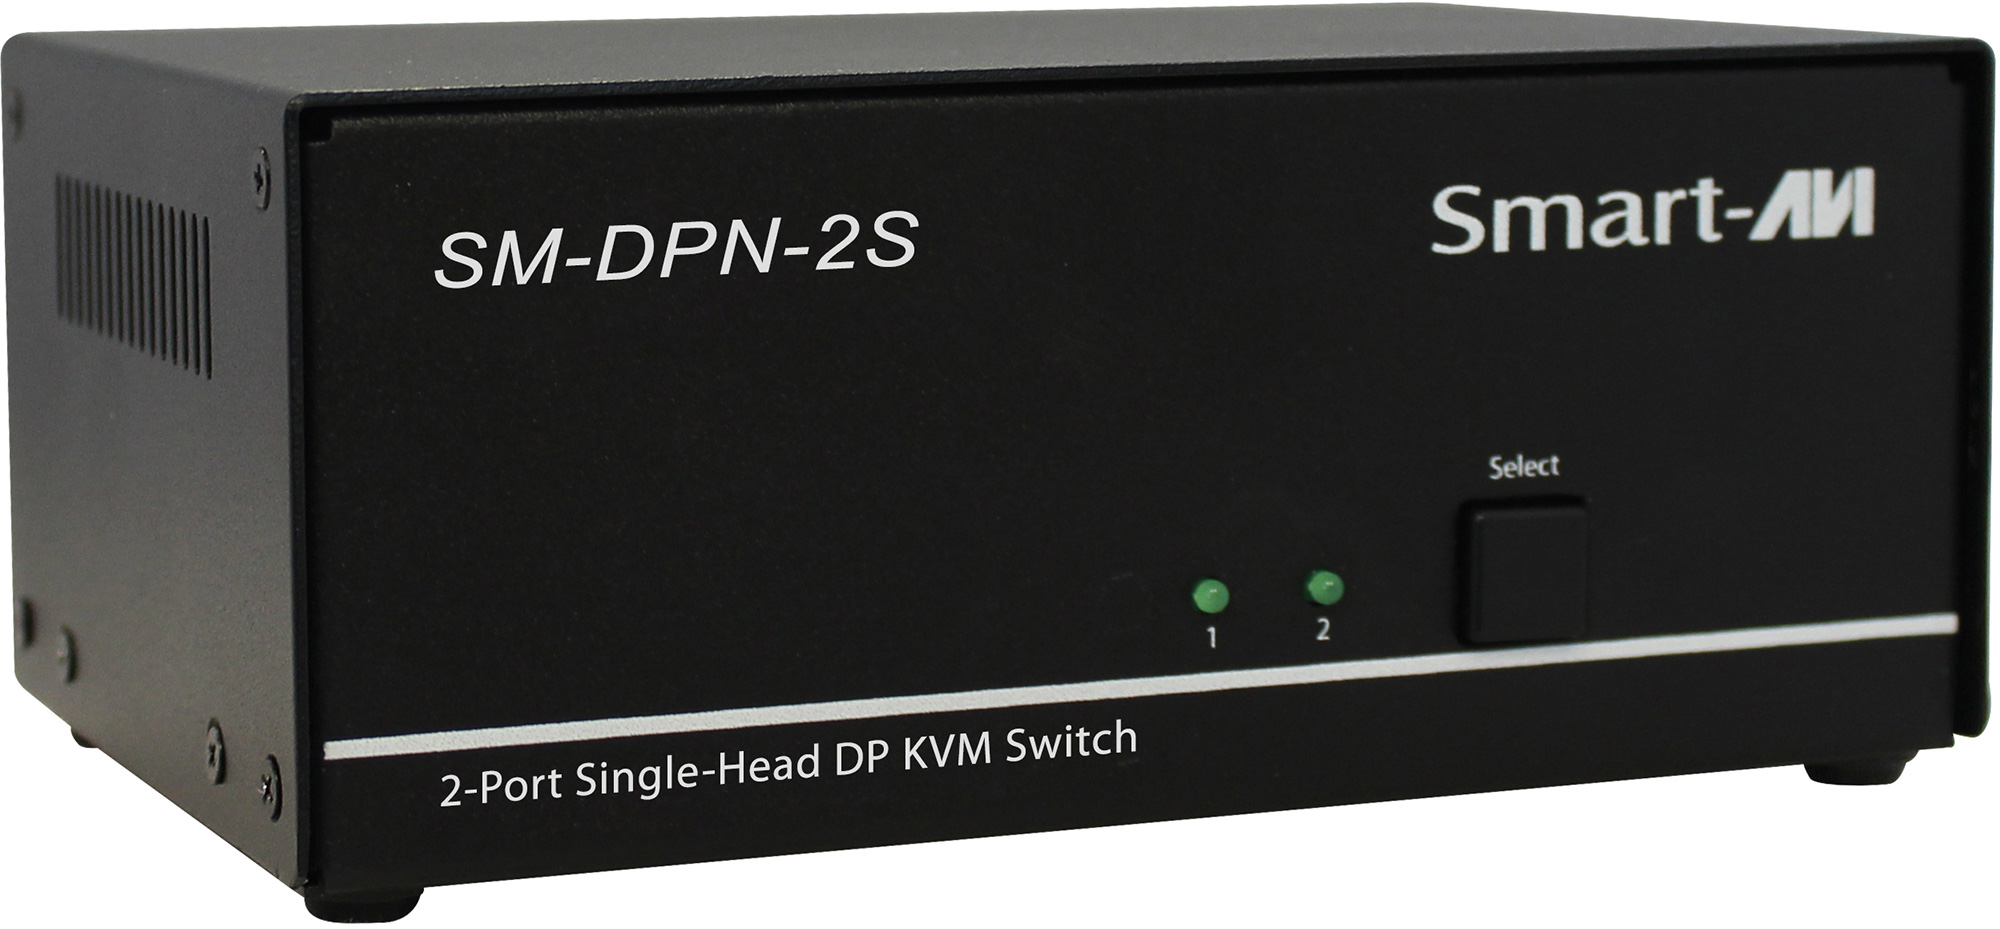 Smart AVI SM-DPN-2S DisplayPort KVM Switch with Audio and USB 2.0 Support - 2 Port SAVI-SM-DPN-2S